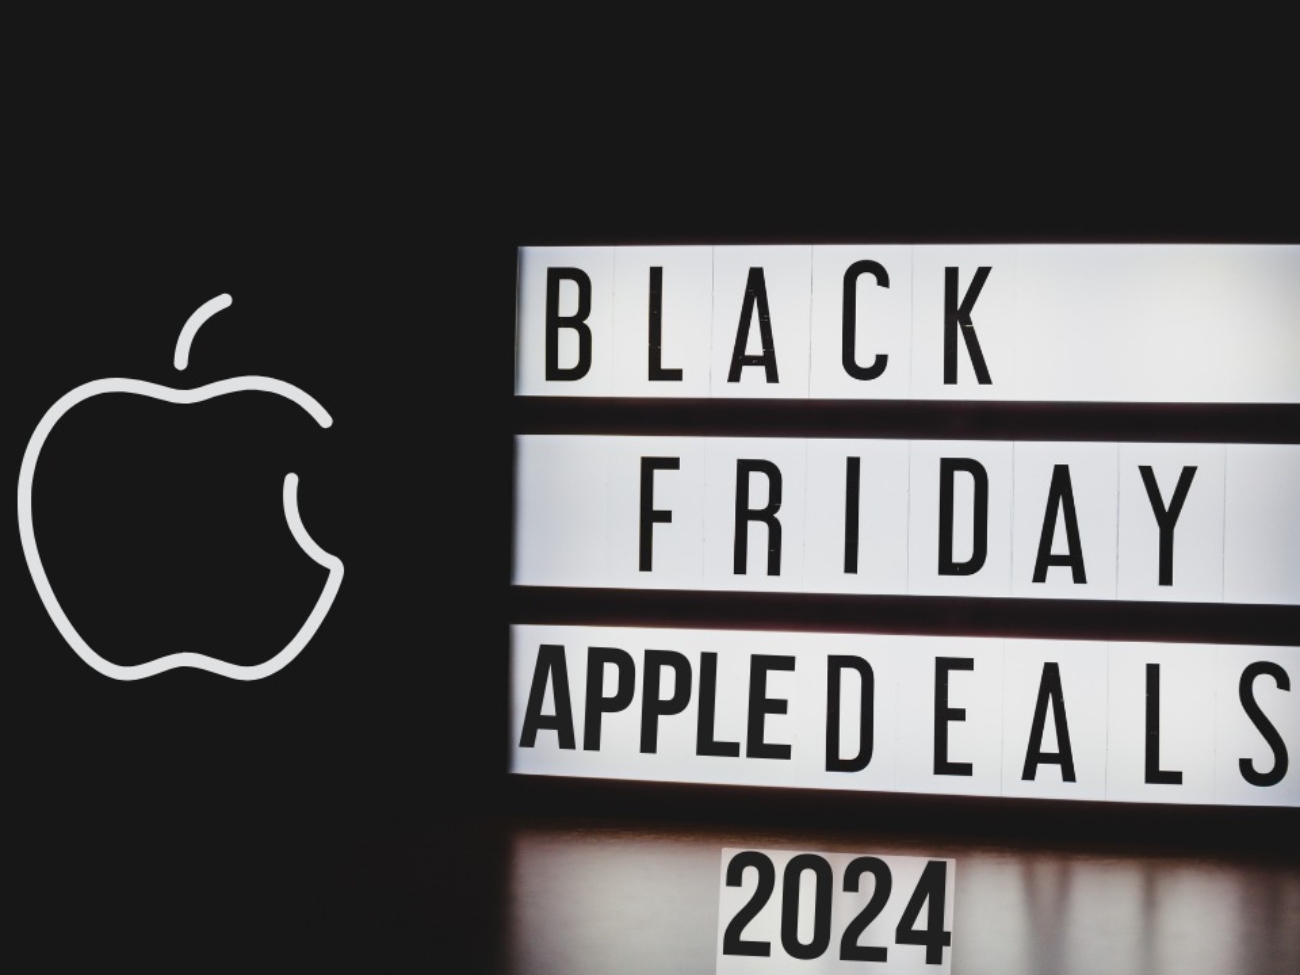 Black friday apple deals 2024